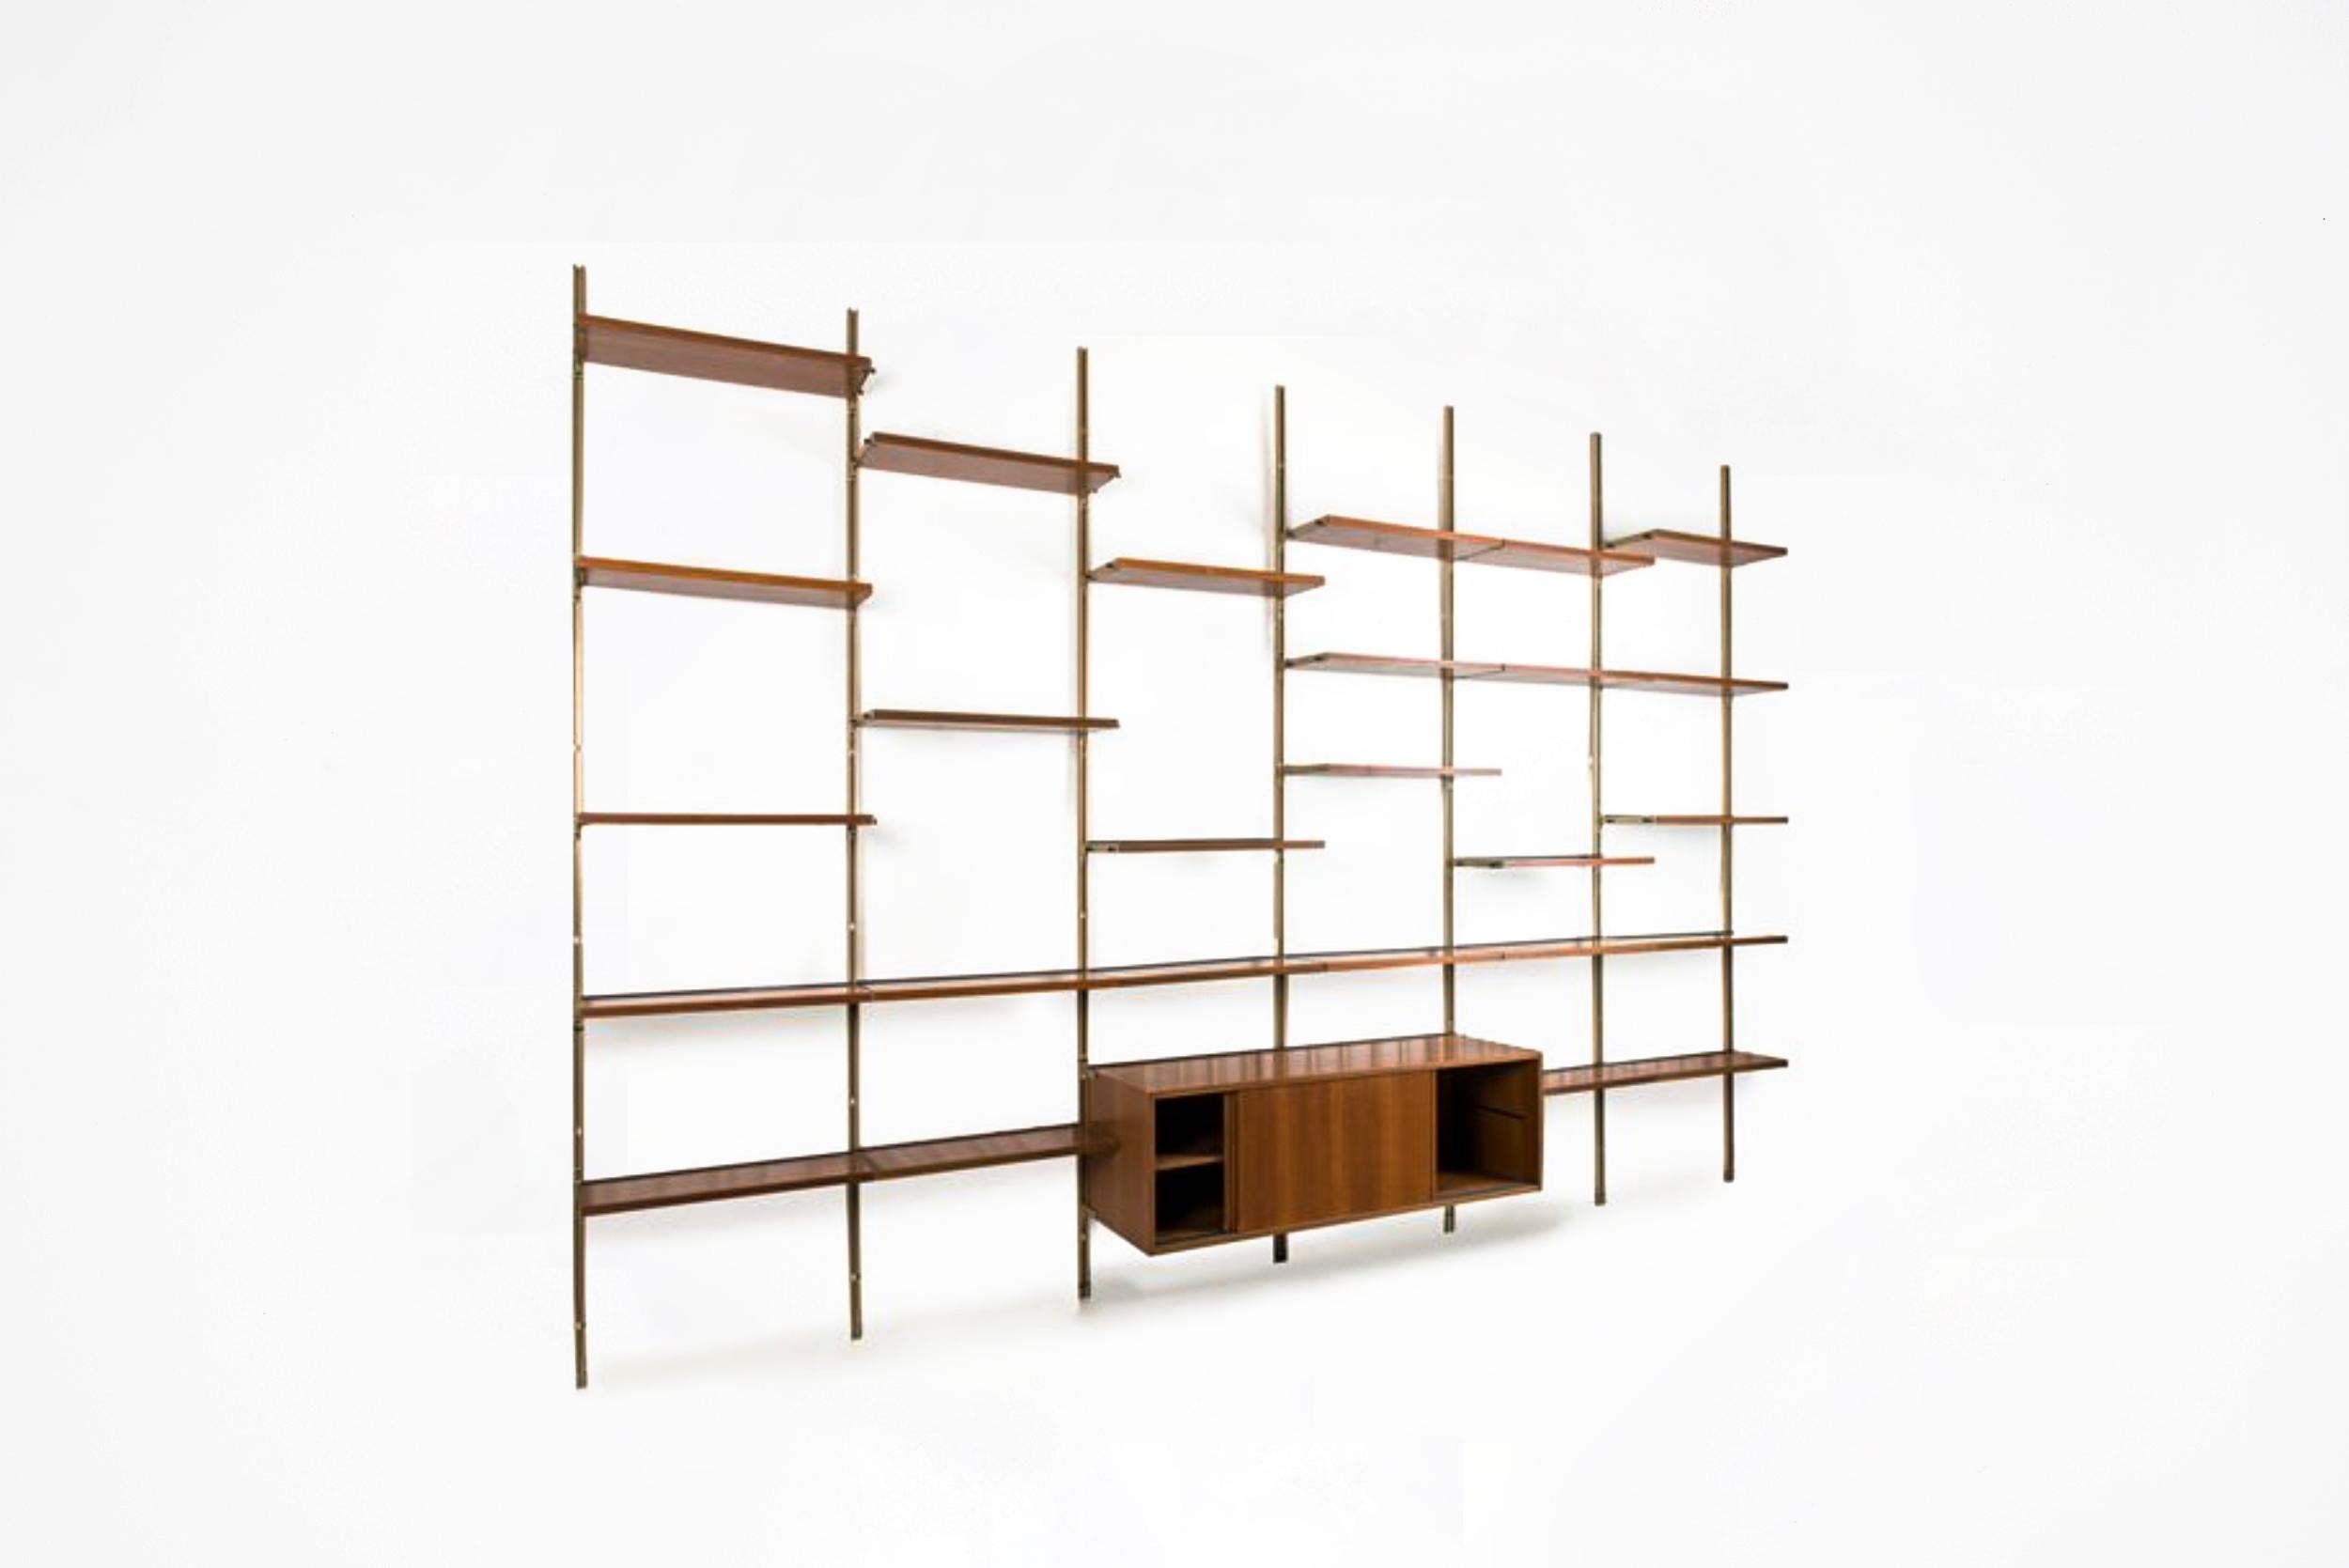 Osvaldo Borsani (1911-1985)

Bookcase model “E 22”
Manufactured by Tecno
Varedo (Italy), 1951
Rosewood, aluminium

Measurements
423 cm x 49 cm x 292 H in
166.55 in x 19.29 in x 114.96 H in

Certificate
Expertise from Osvaldo Borsani